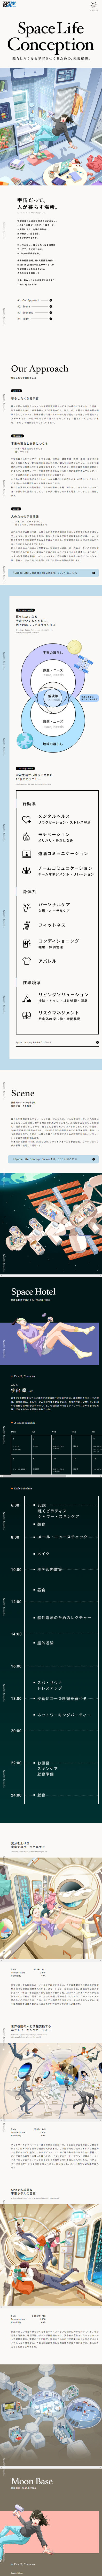 Space Life Conception_sp_1